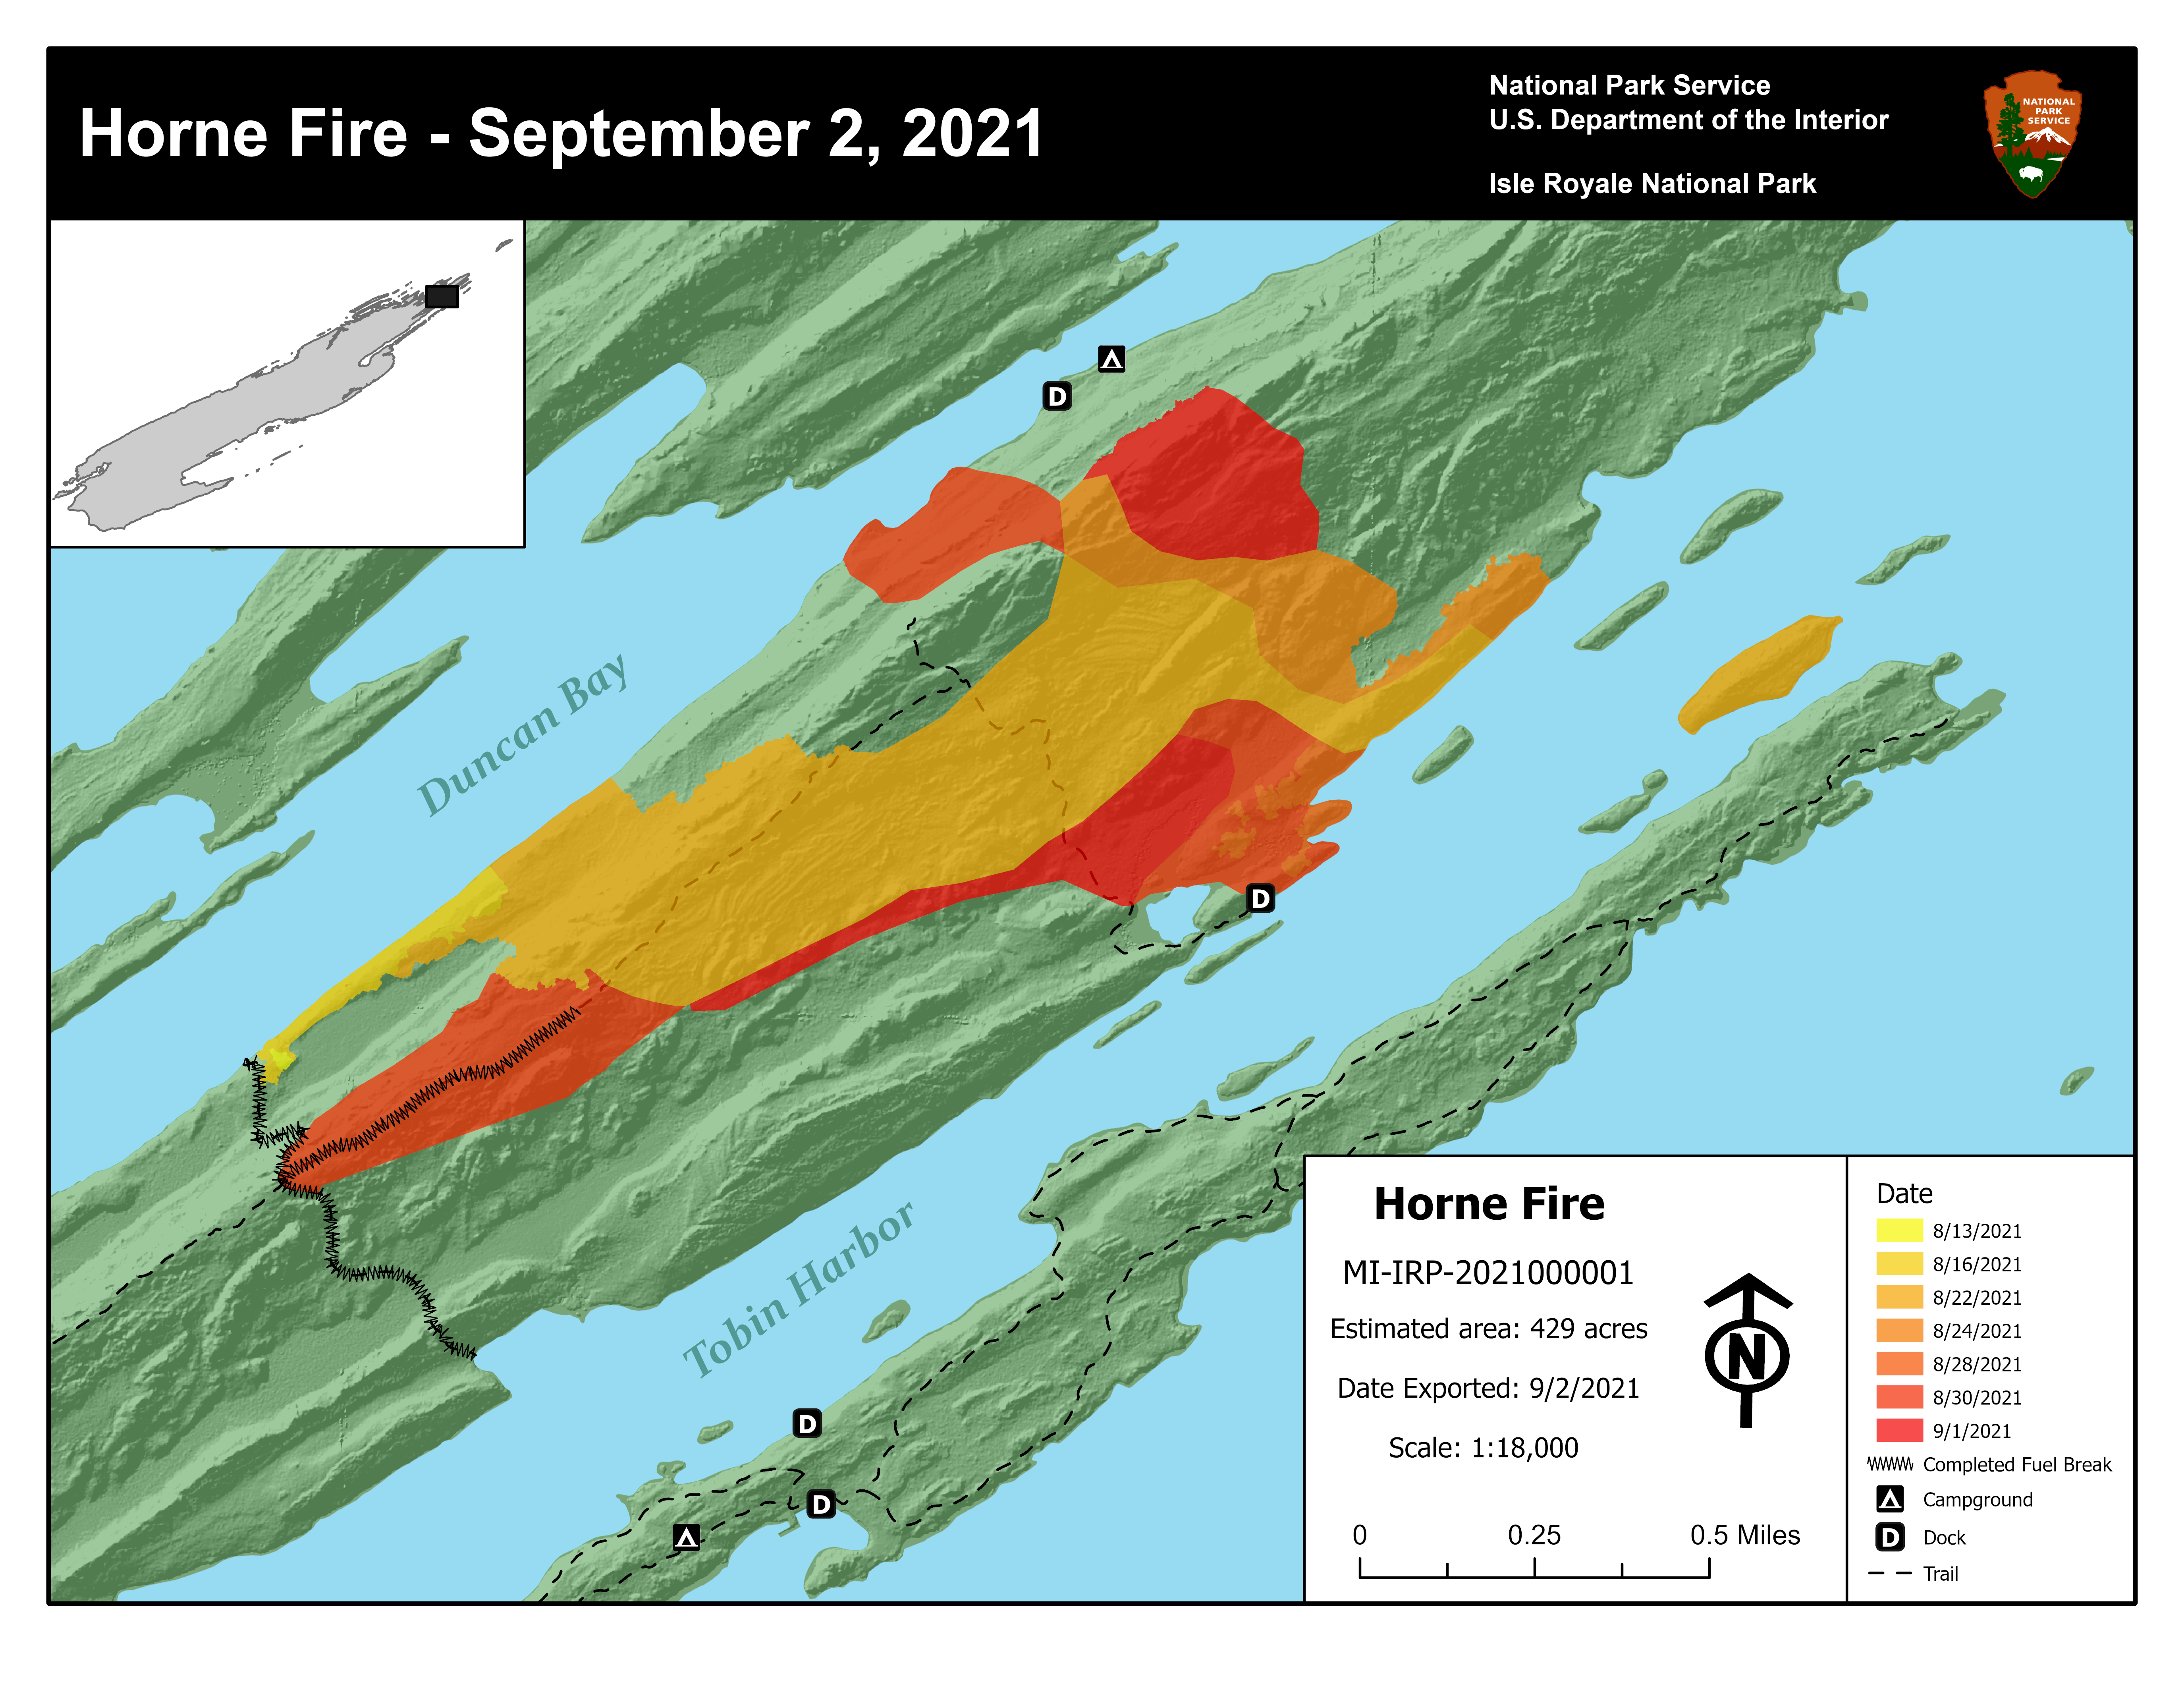 Horne Fire Map updated 9/2/21